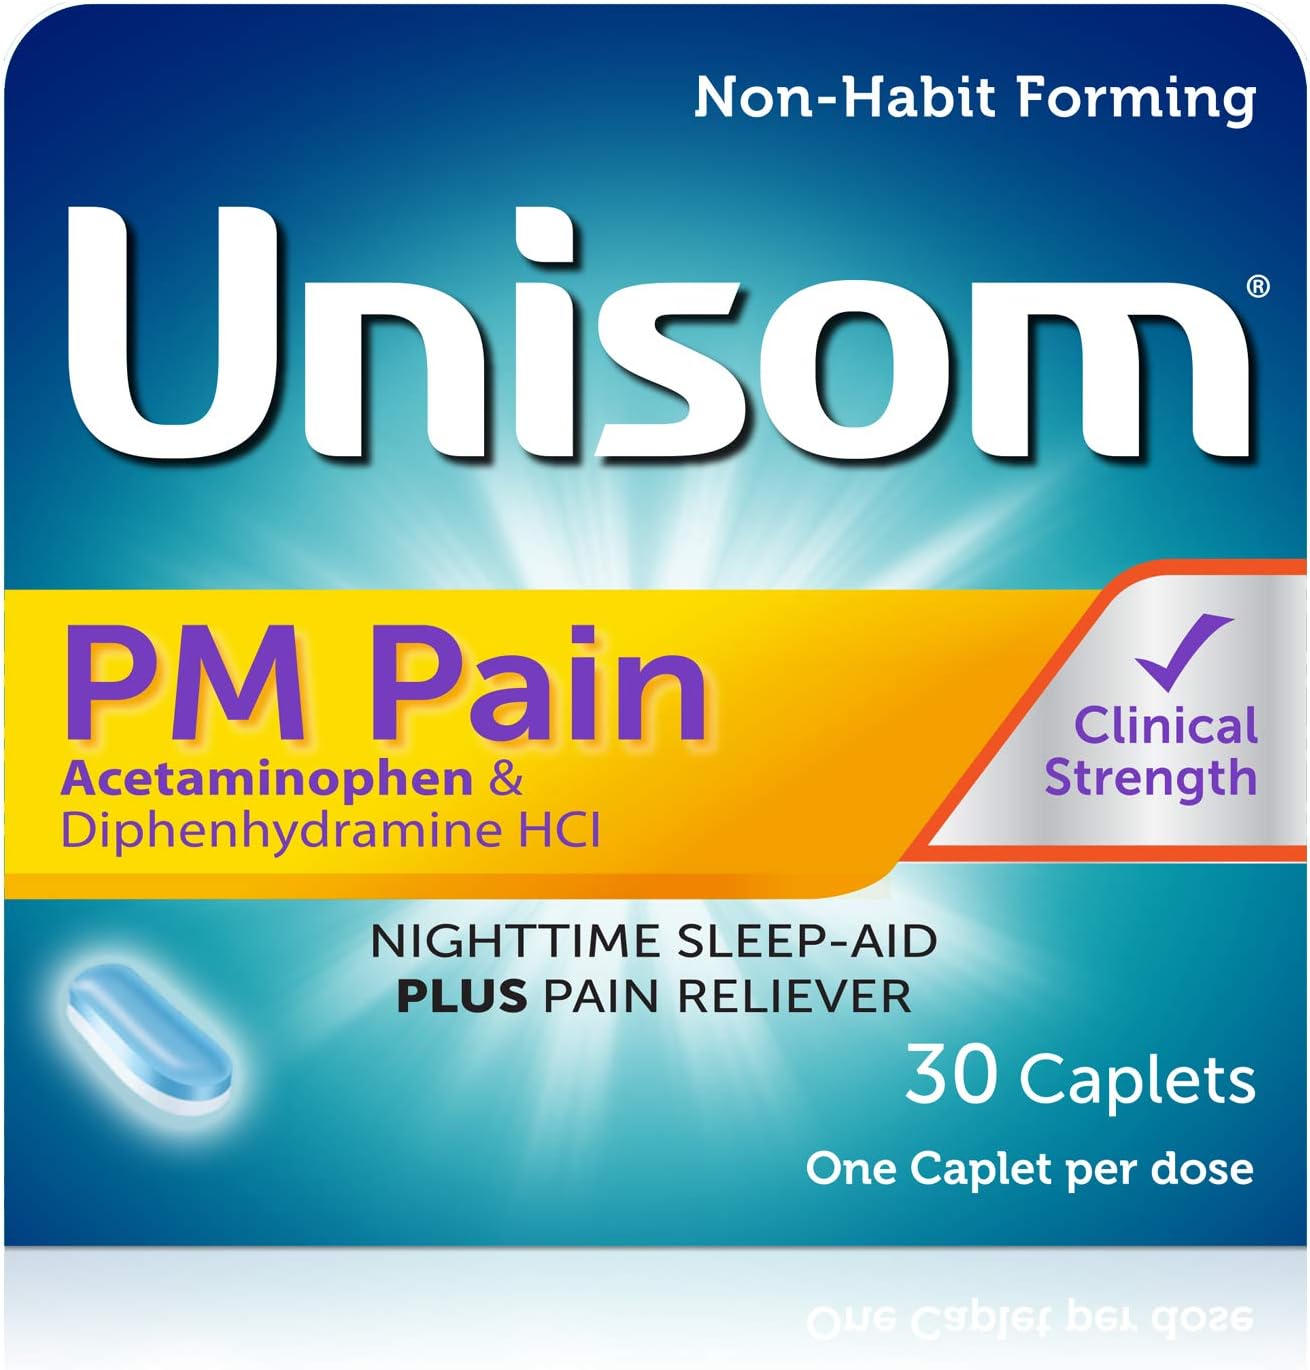 Unisom PM Pain Nighttime Sleep-aid + Pain Reliever, Acetaminophen & Diphenhydramine HCI, 30 Caplets, 50mg